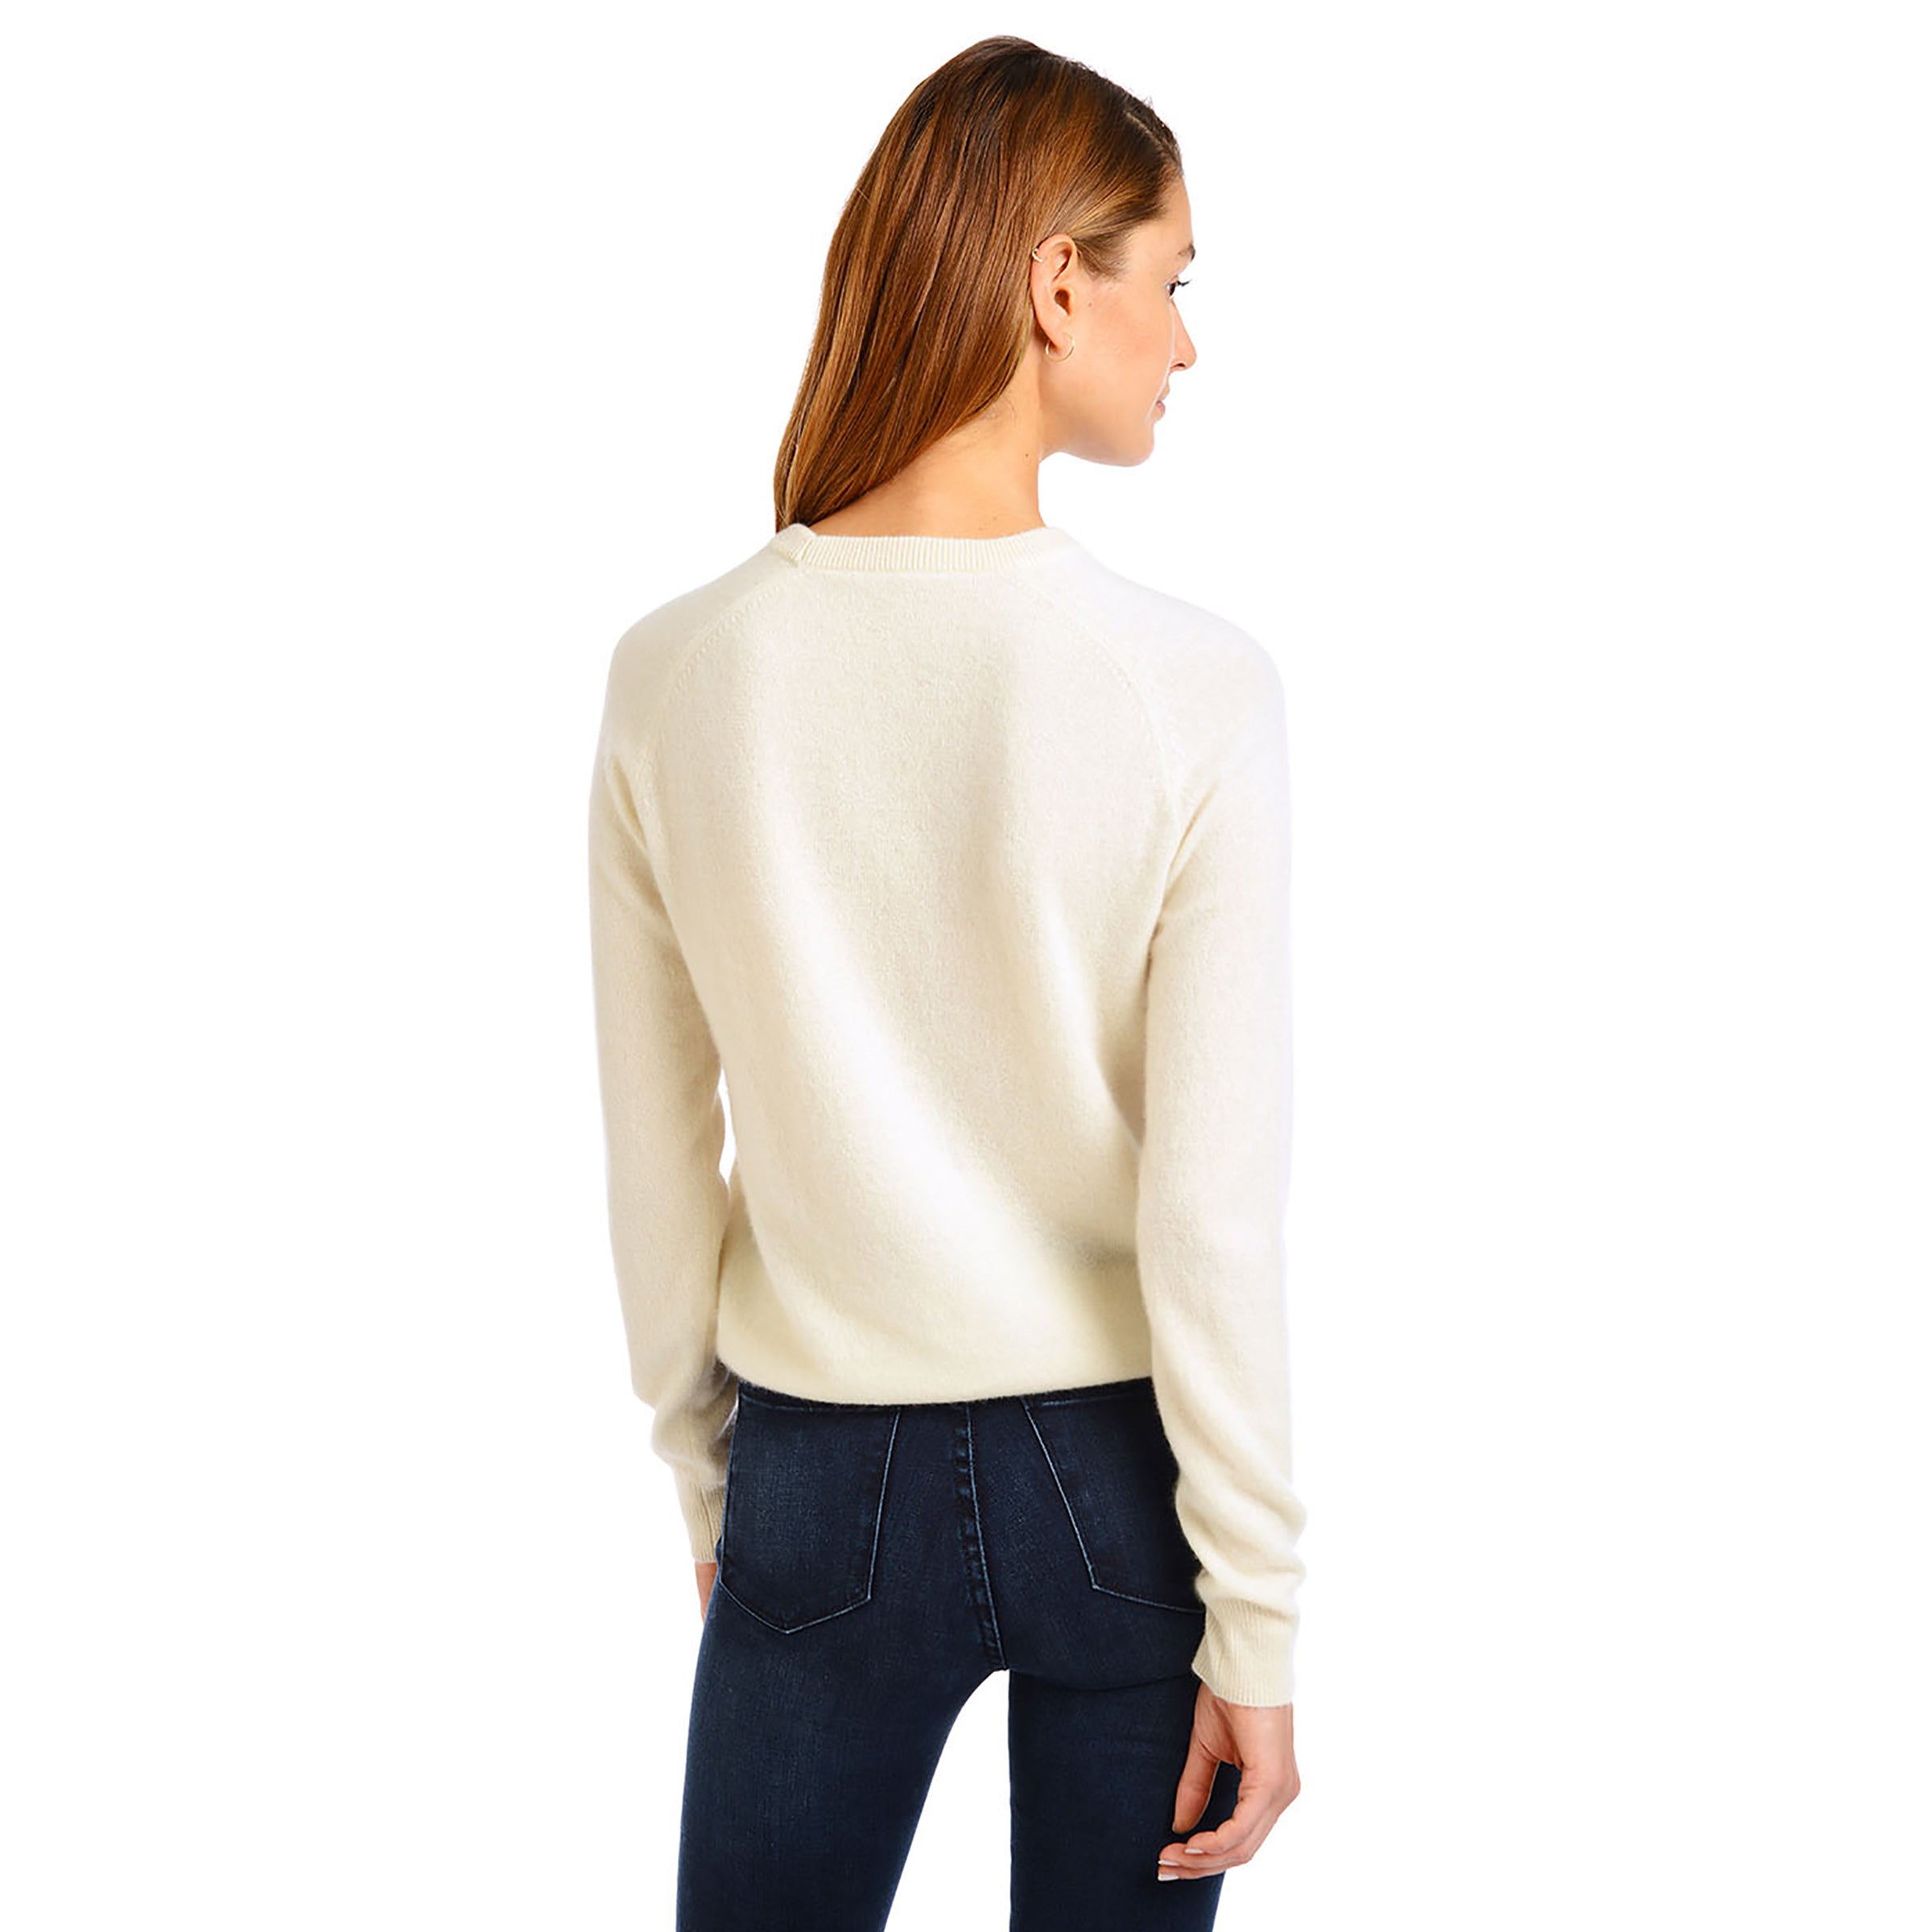 Women wearing Cream Cashmere Raglan Crew Cambridge Sweater